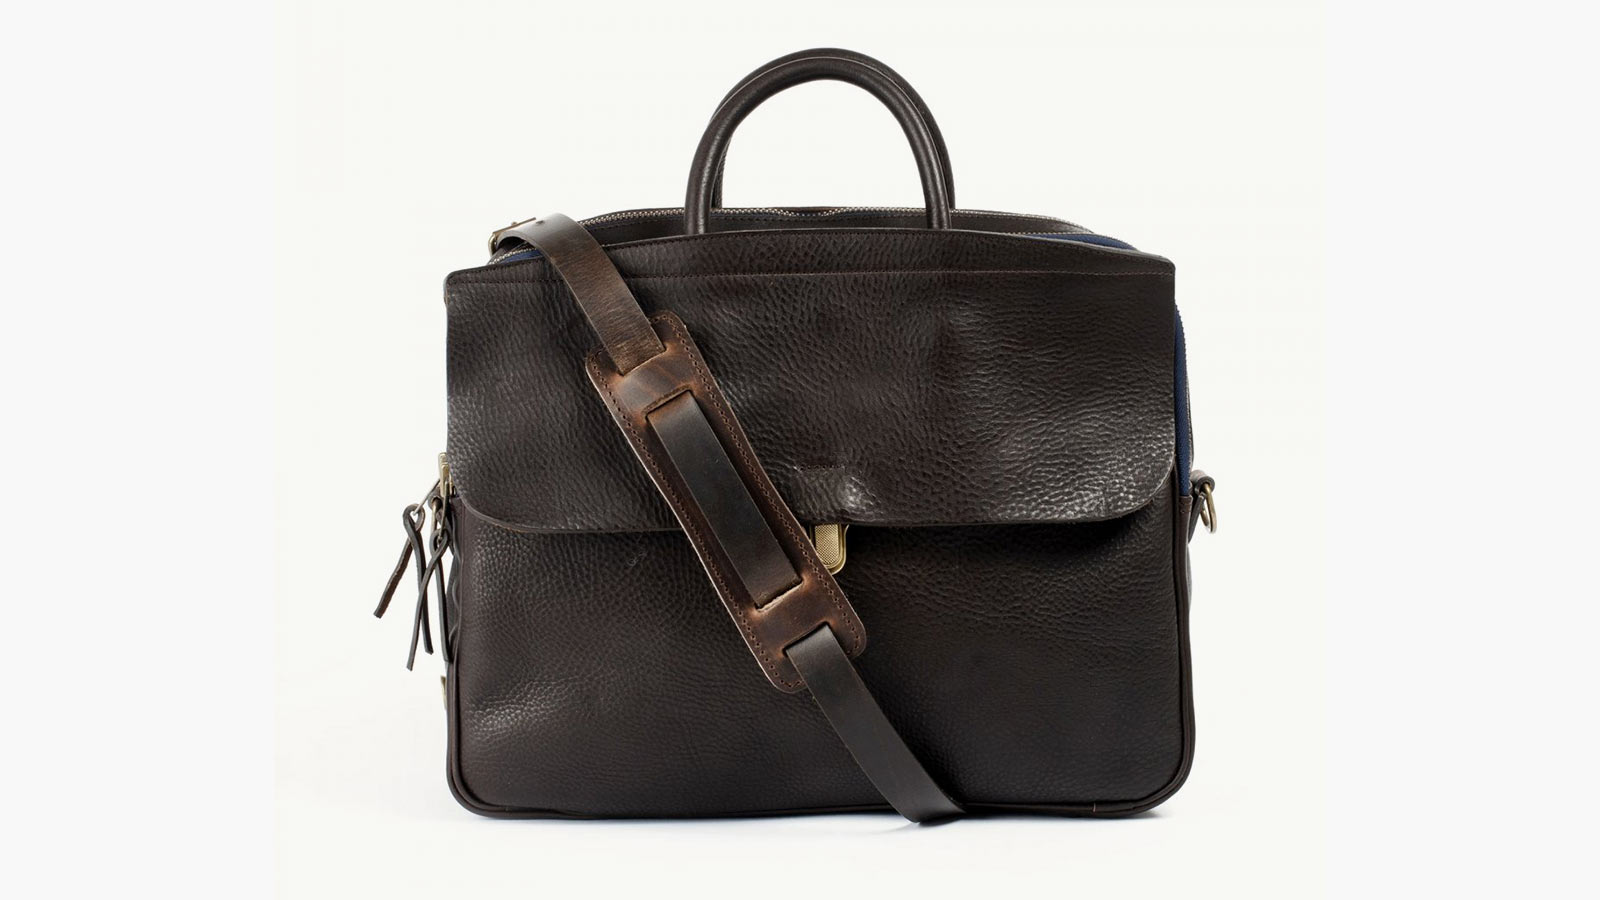 Bleu de Chauffe ZEPPO Business Bag Is A Modern Take On The Classic ...